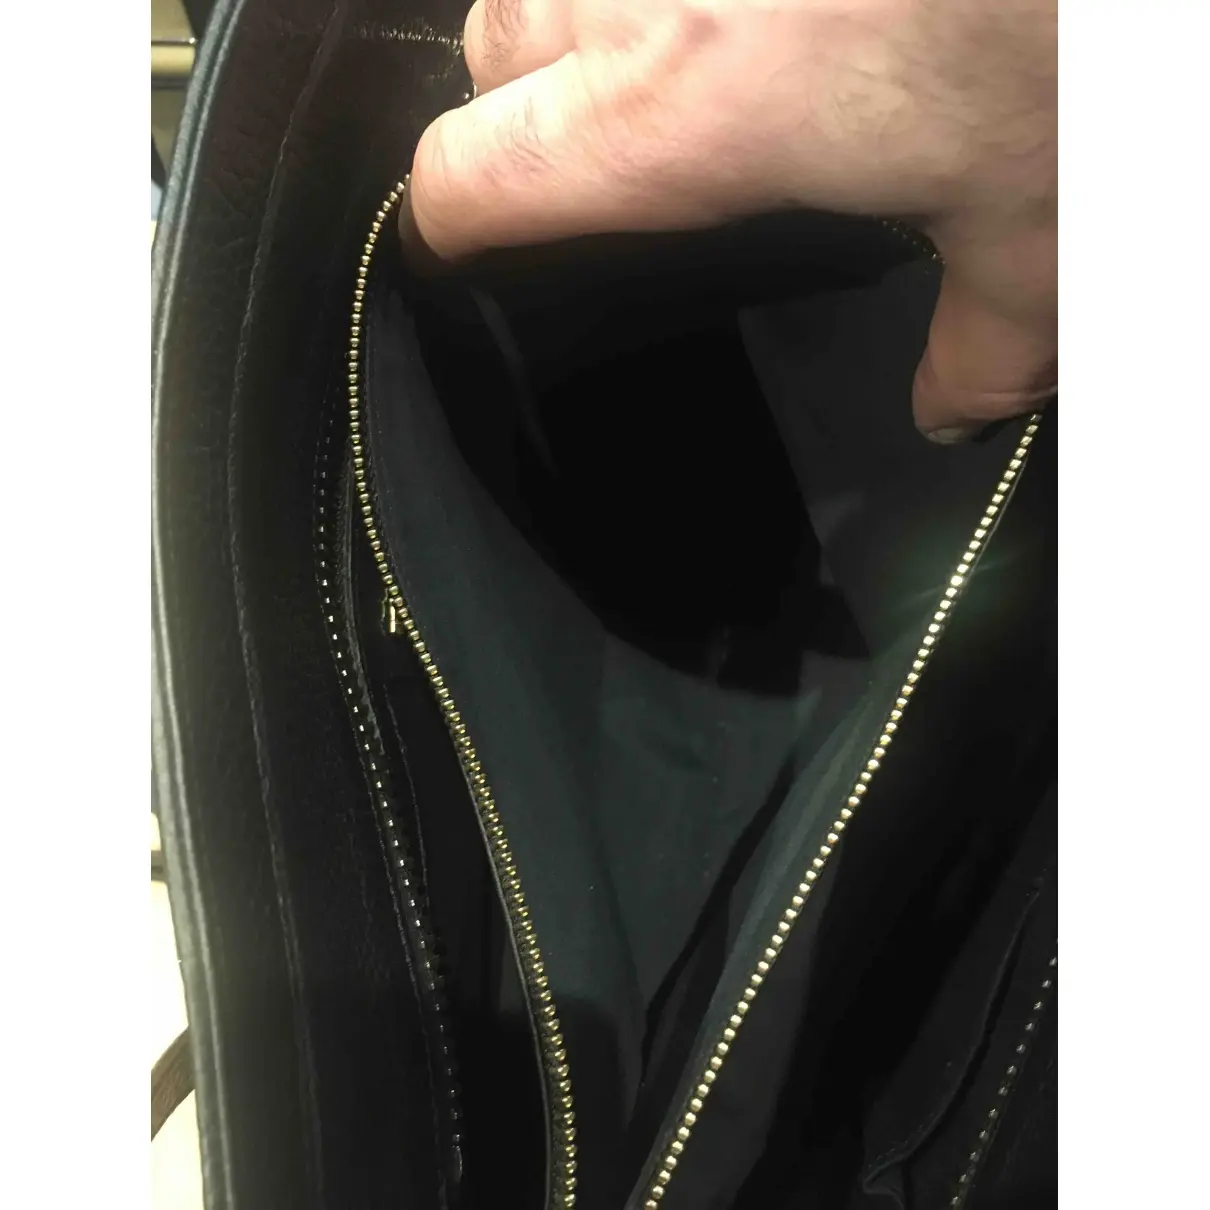 Buy Philipp Plein Leather handbag online